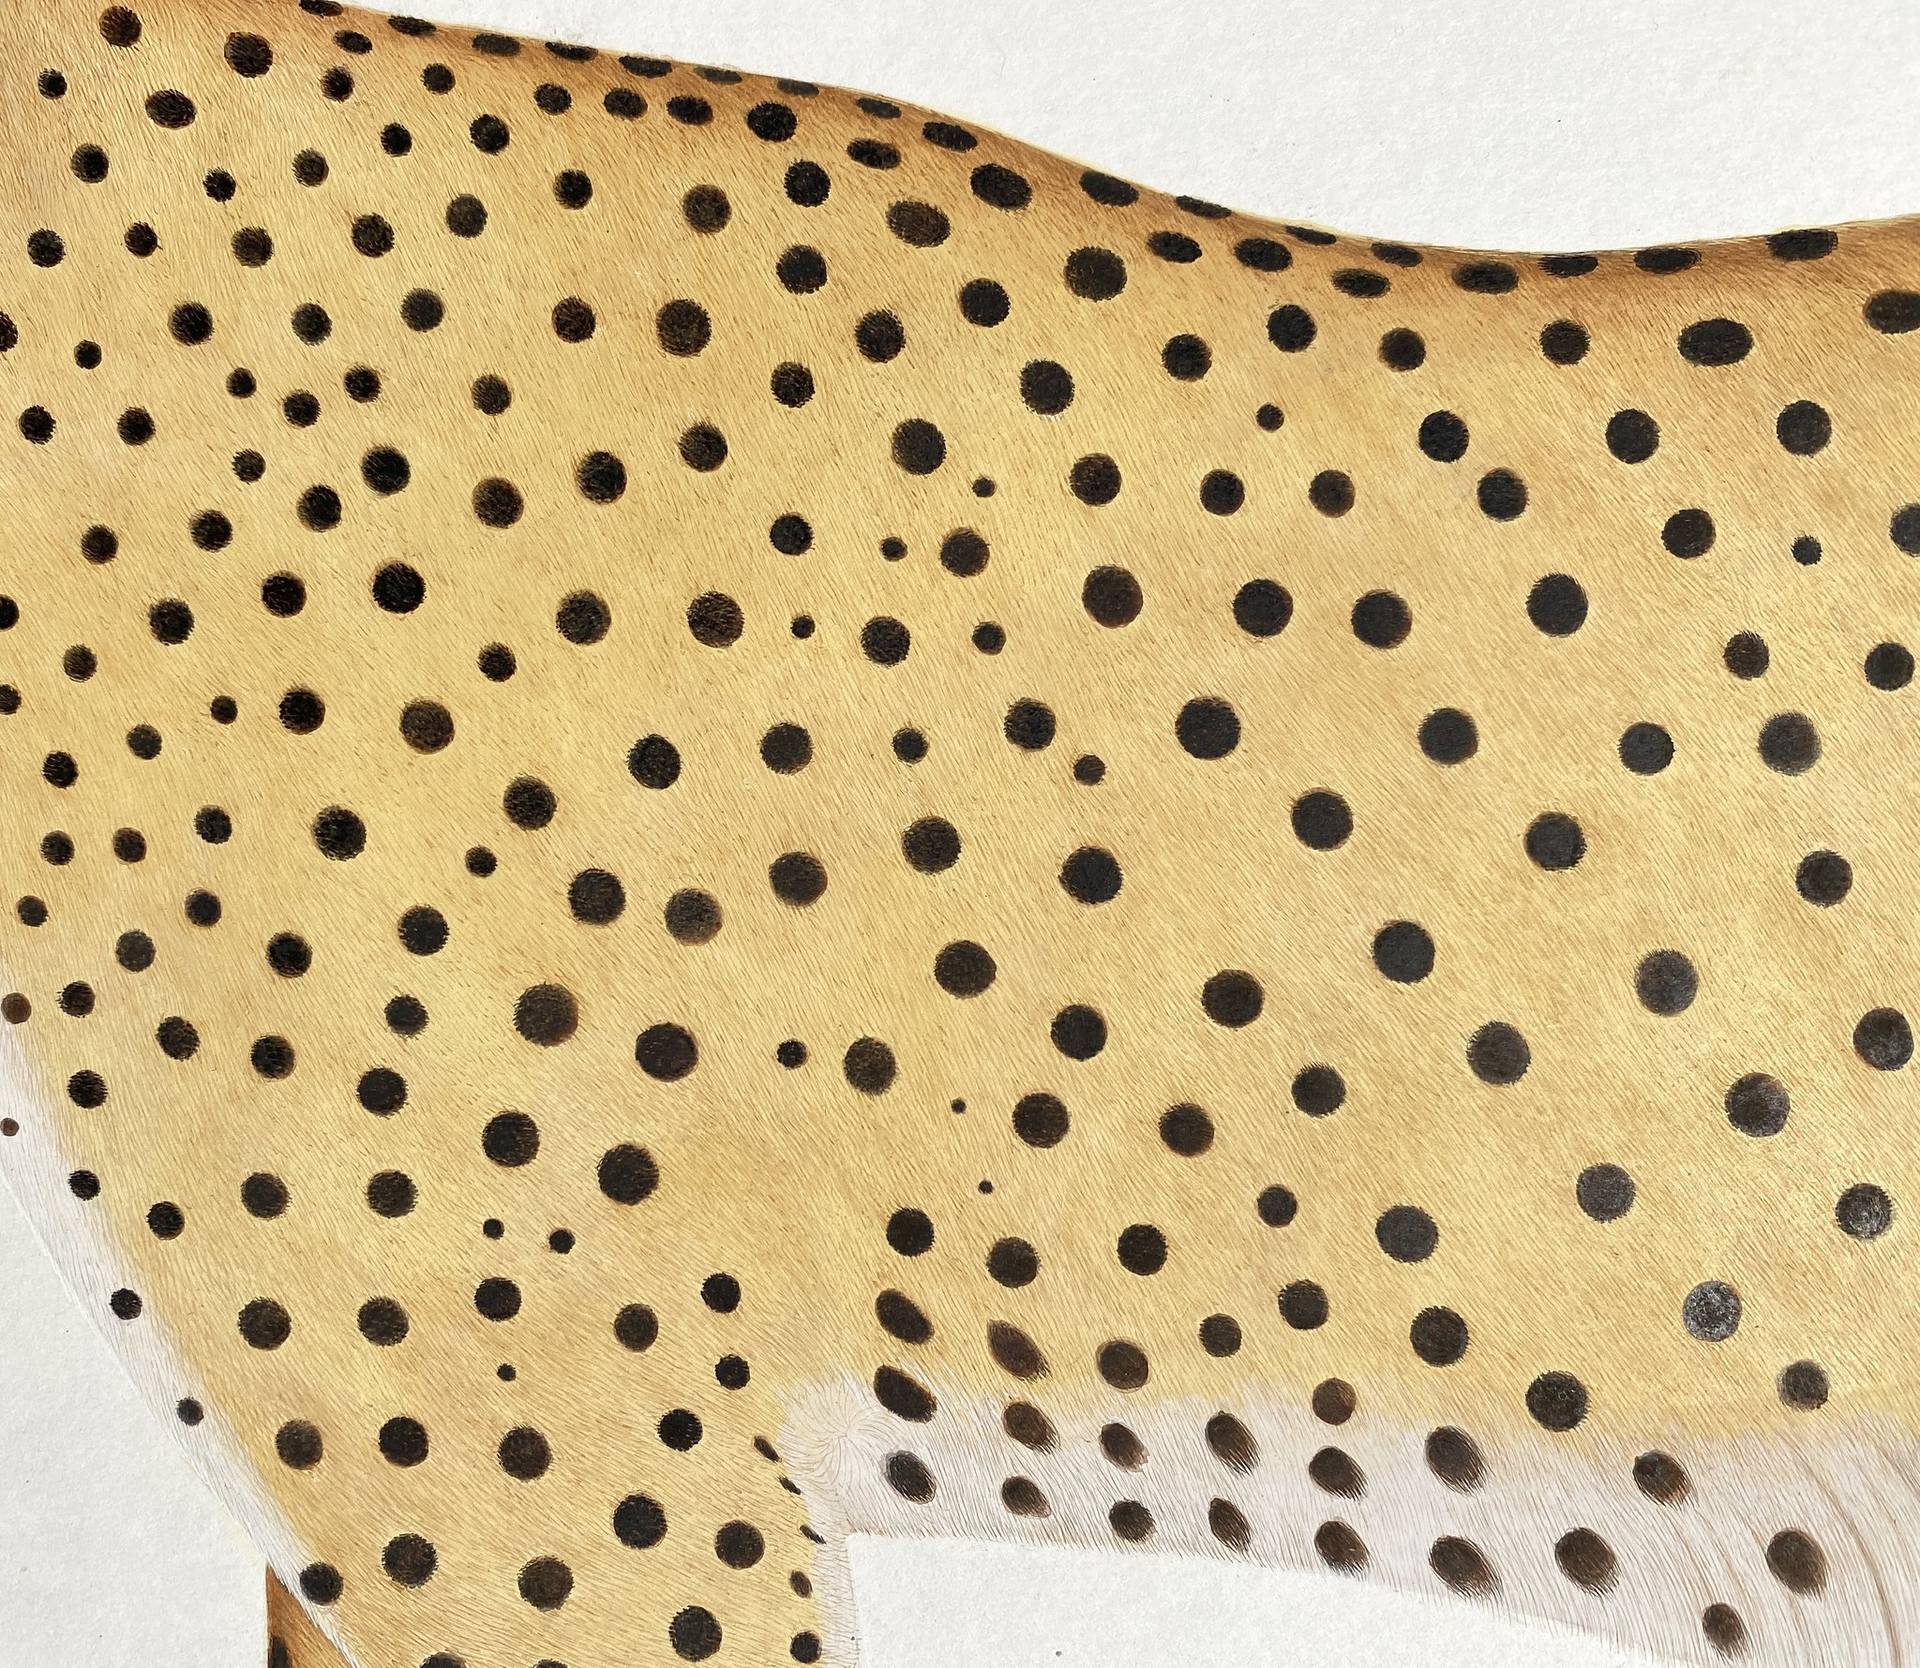 Cheetha Artwork, Indian Miniature Cheetah Painting